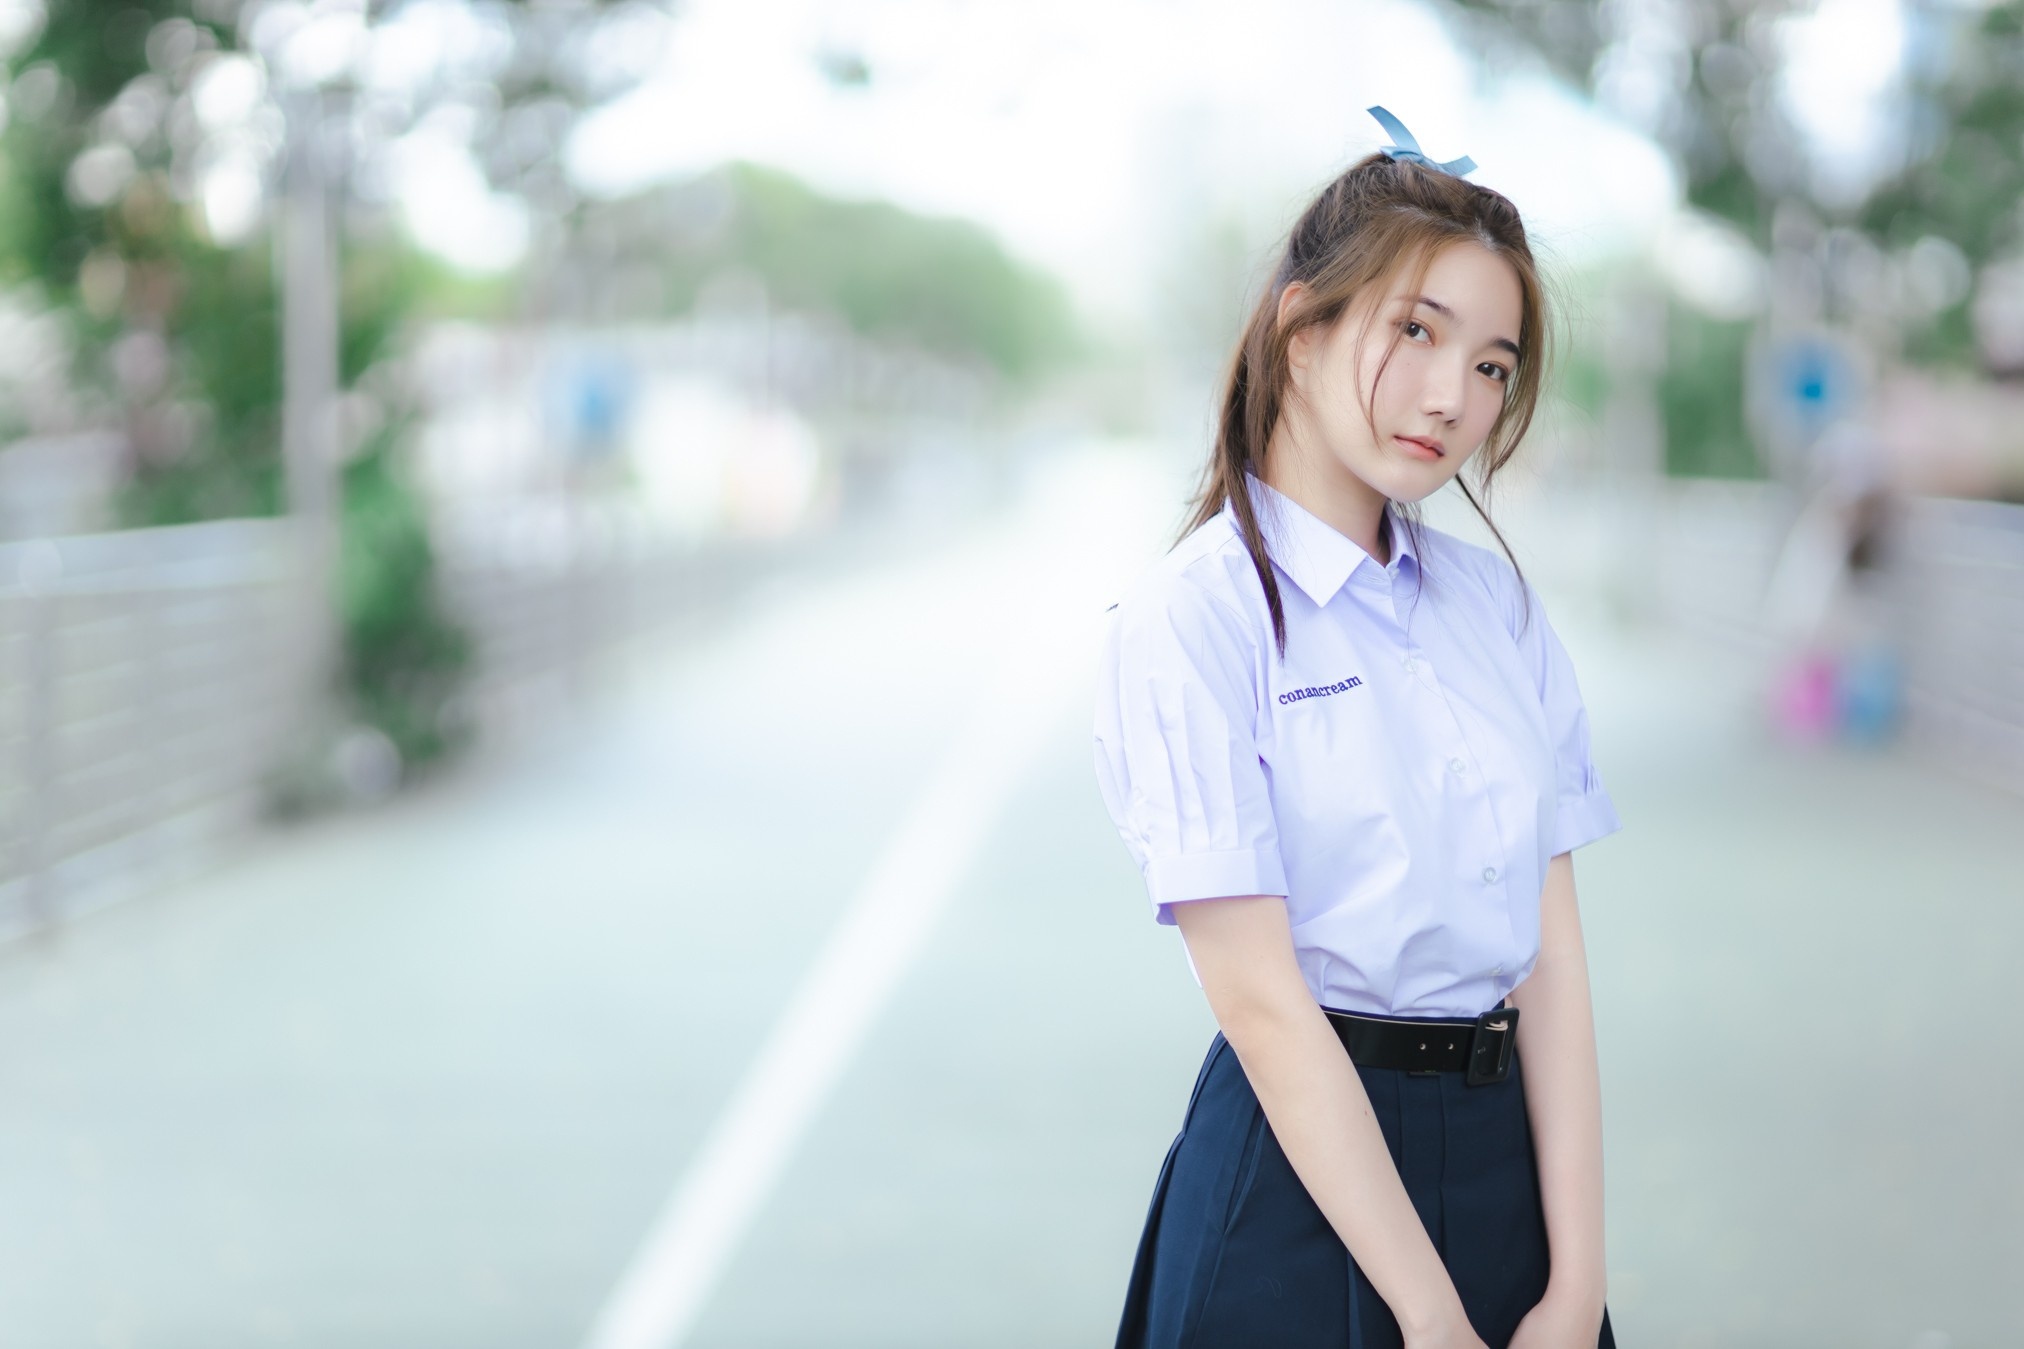 Asian Women Women Outdoors Students Uniform 2024x1349